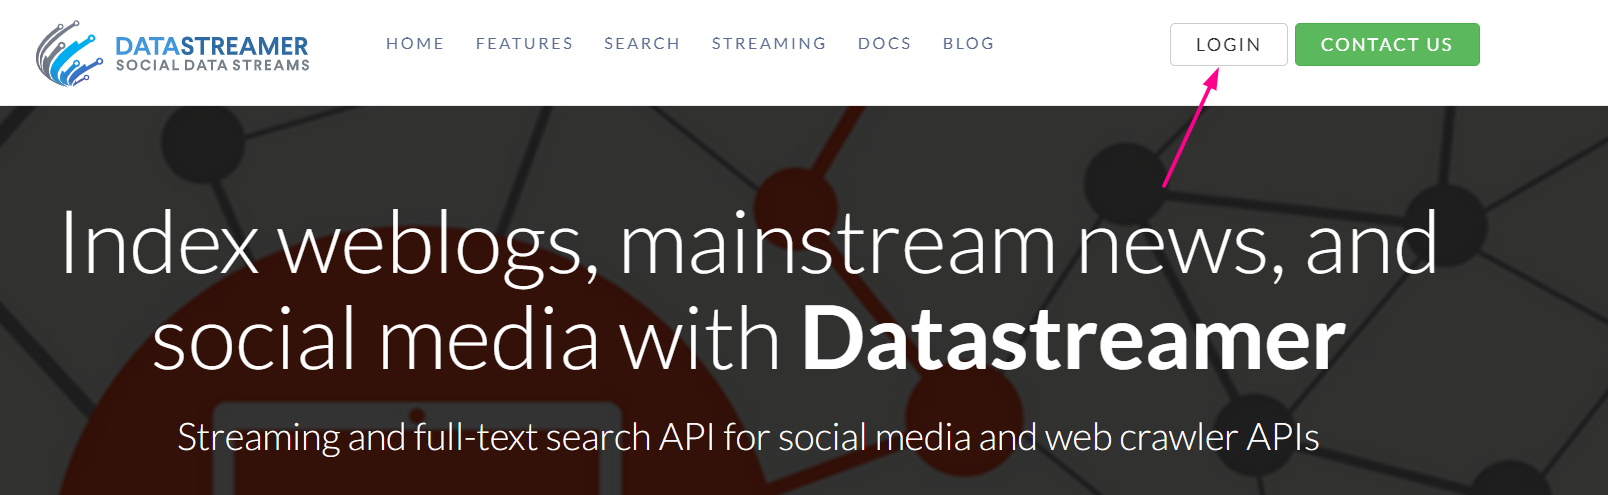 DataStreamer - Overview